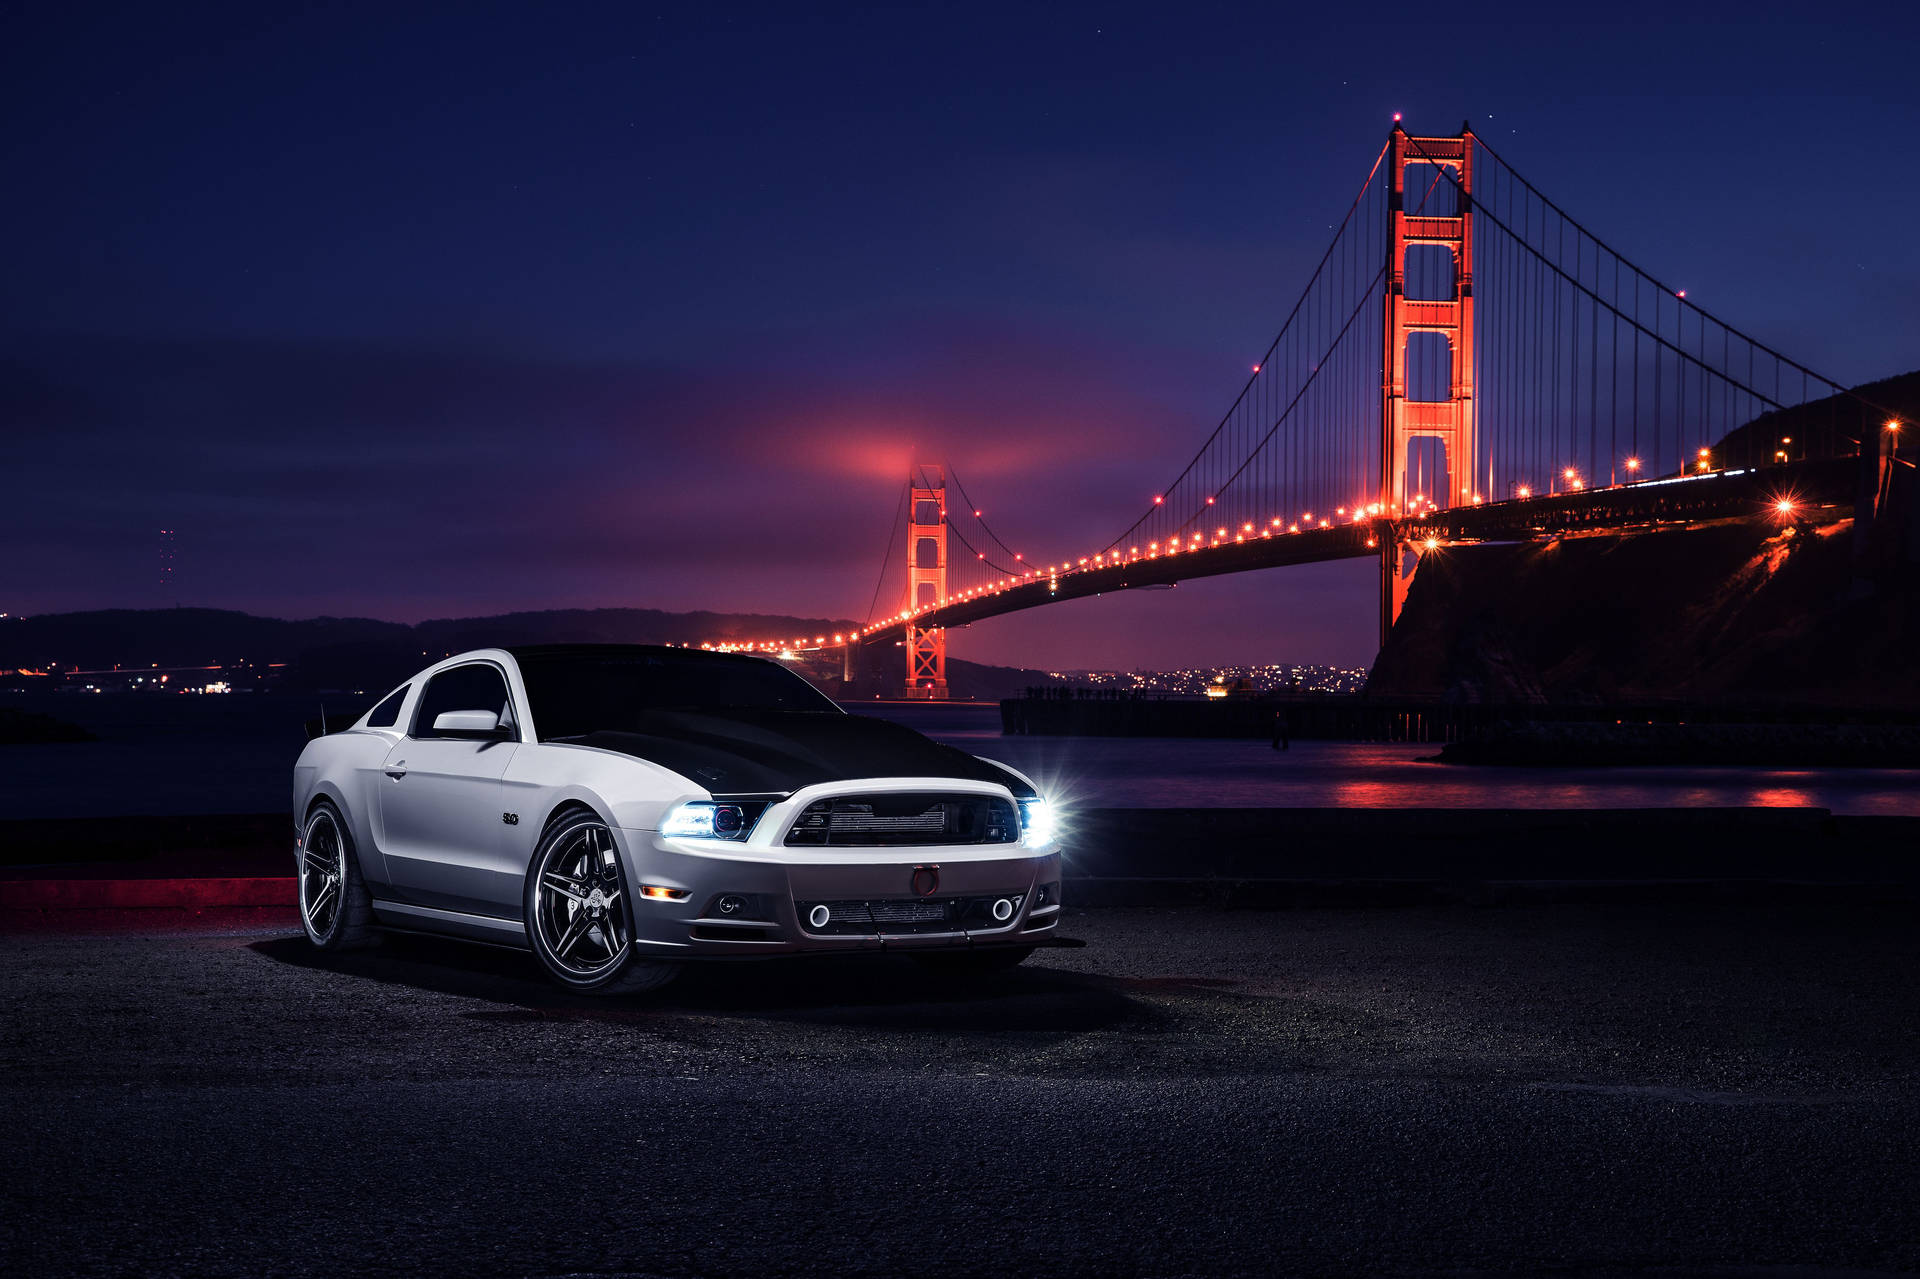 Ford Mustang Golden Gate Bridge Background